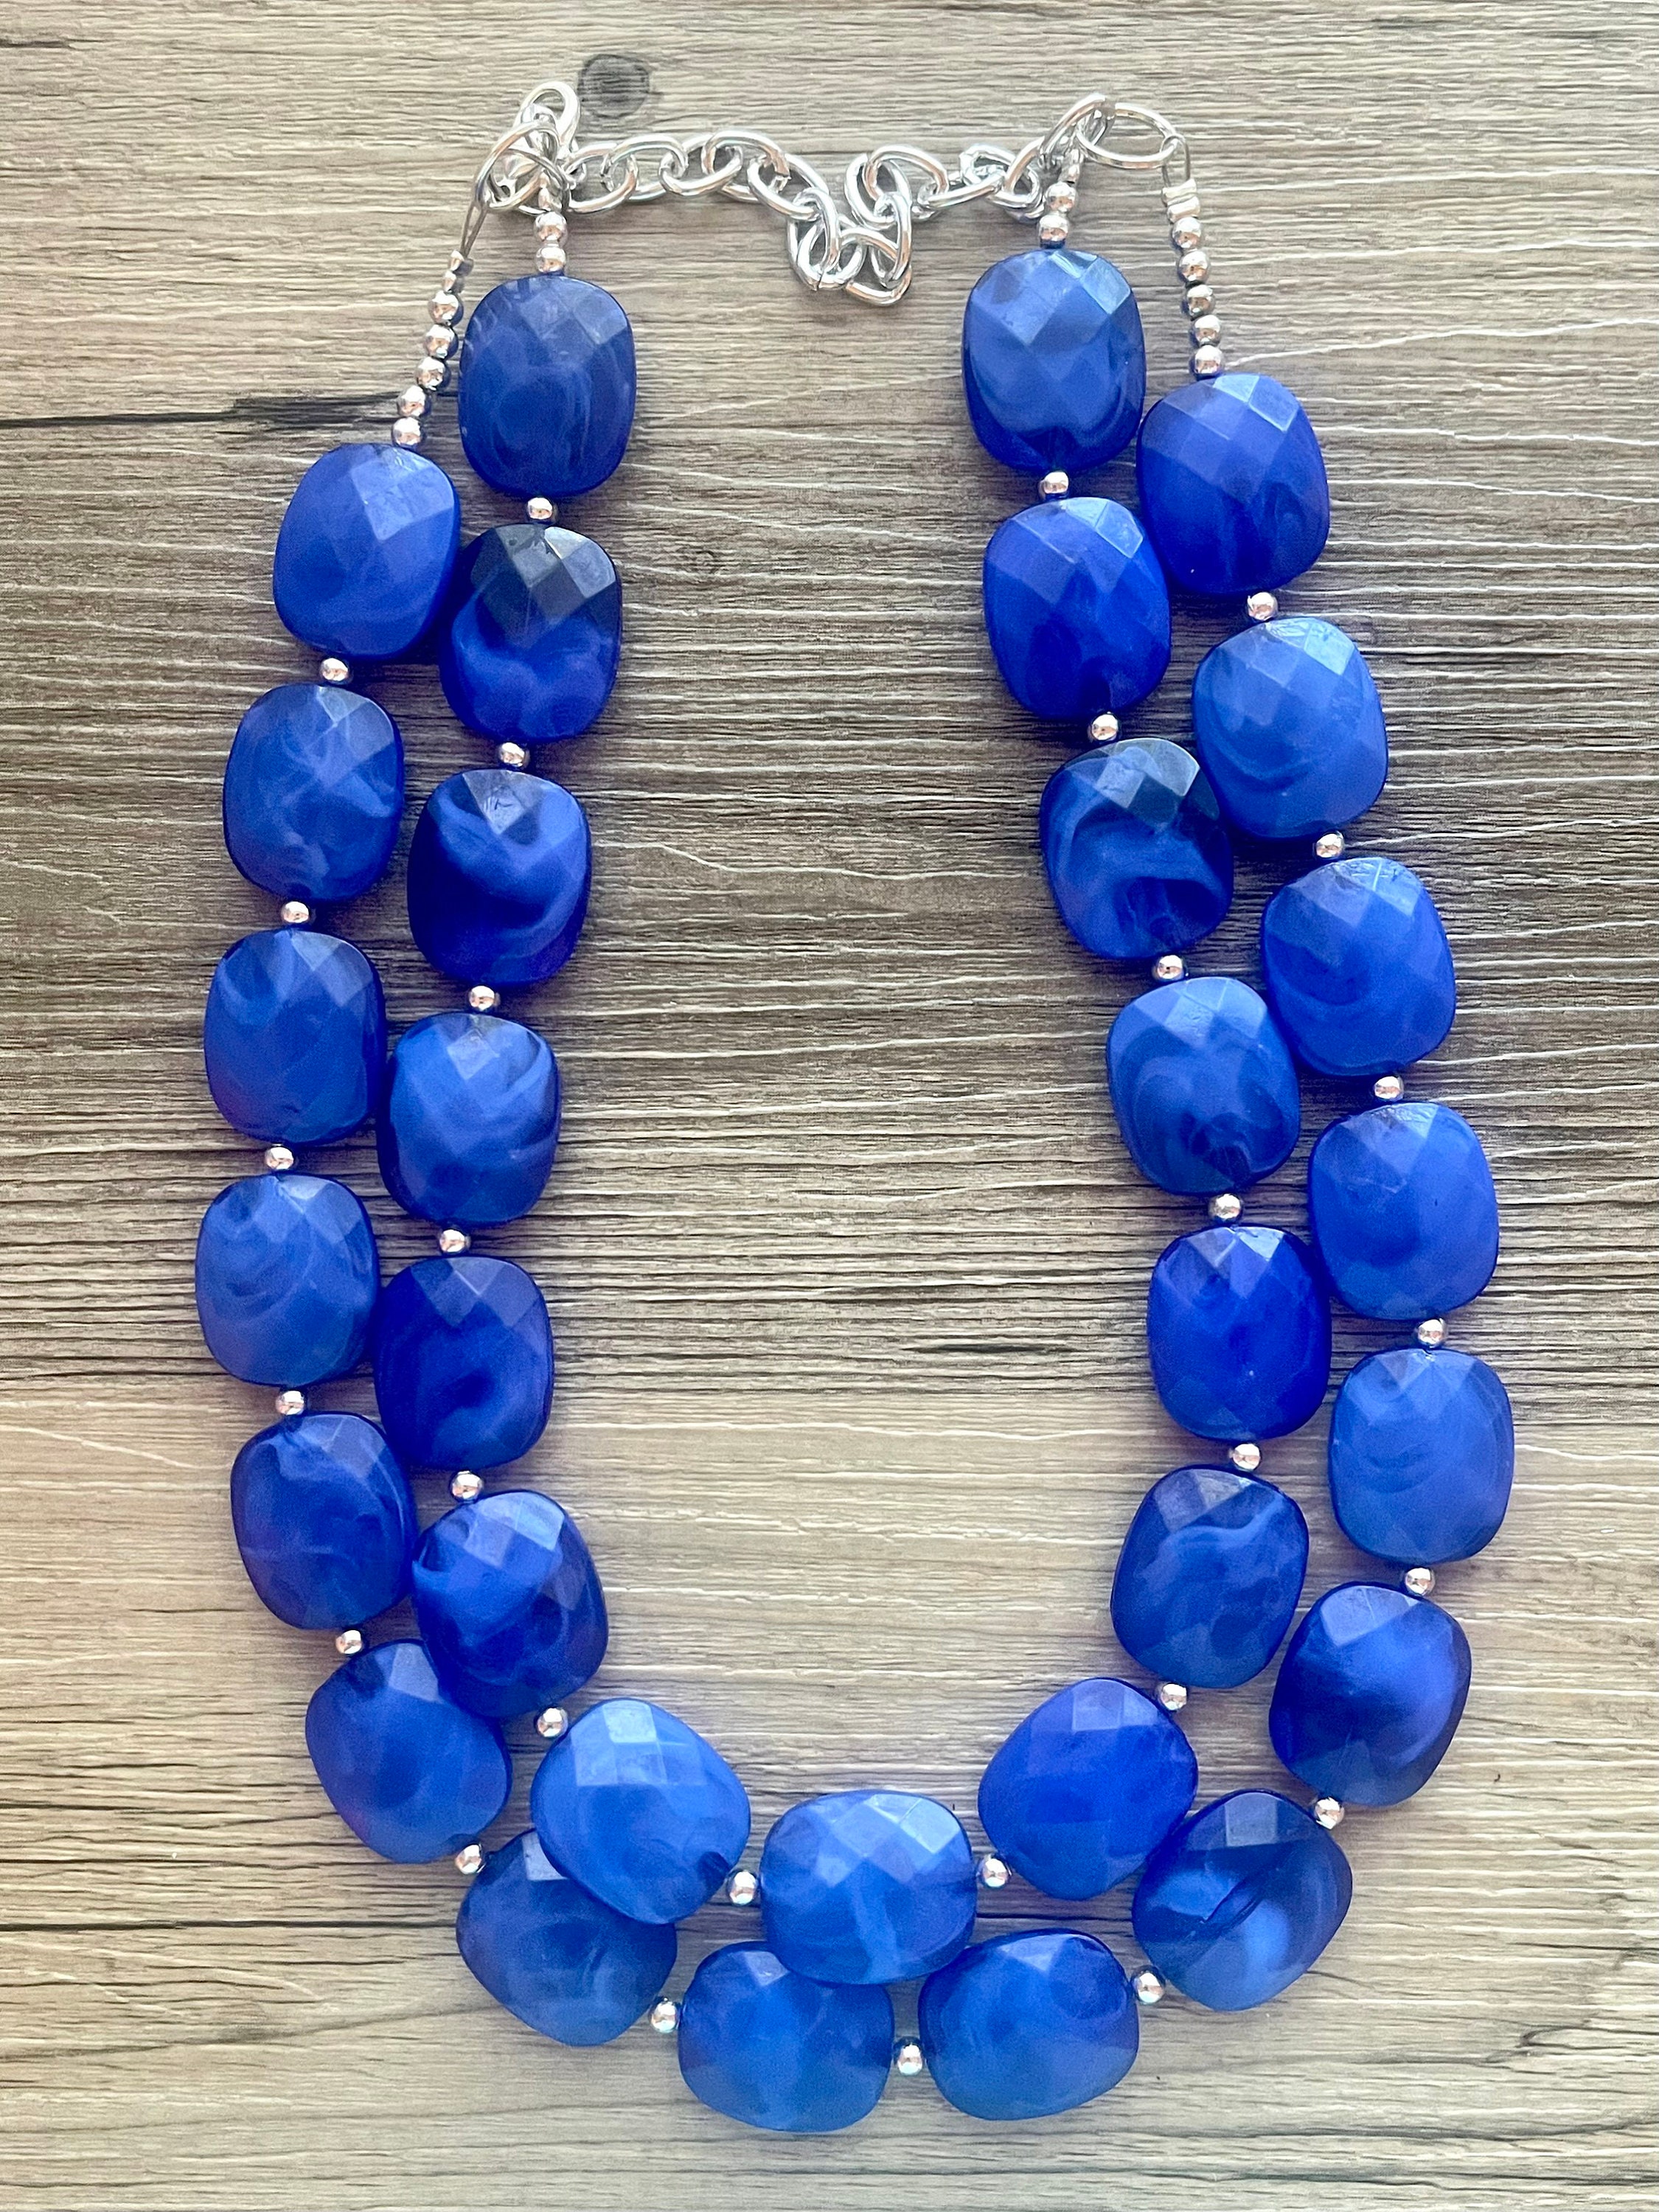 Authentic Konyak Naga Cobalt Blue Glass Bead Necklace, Ca Early 1900